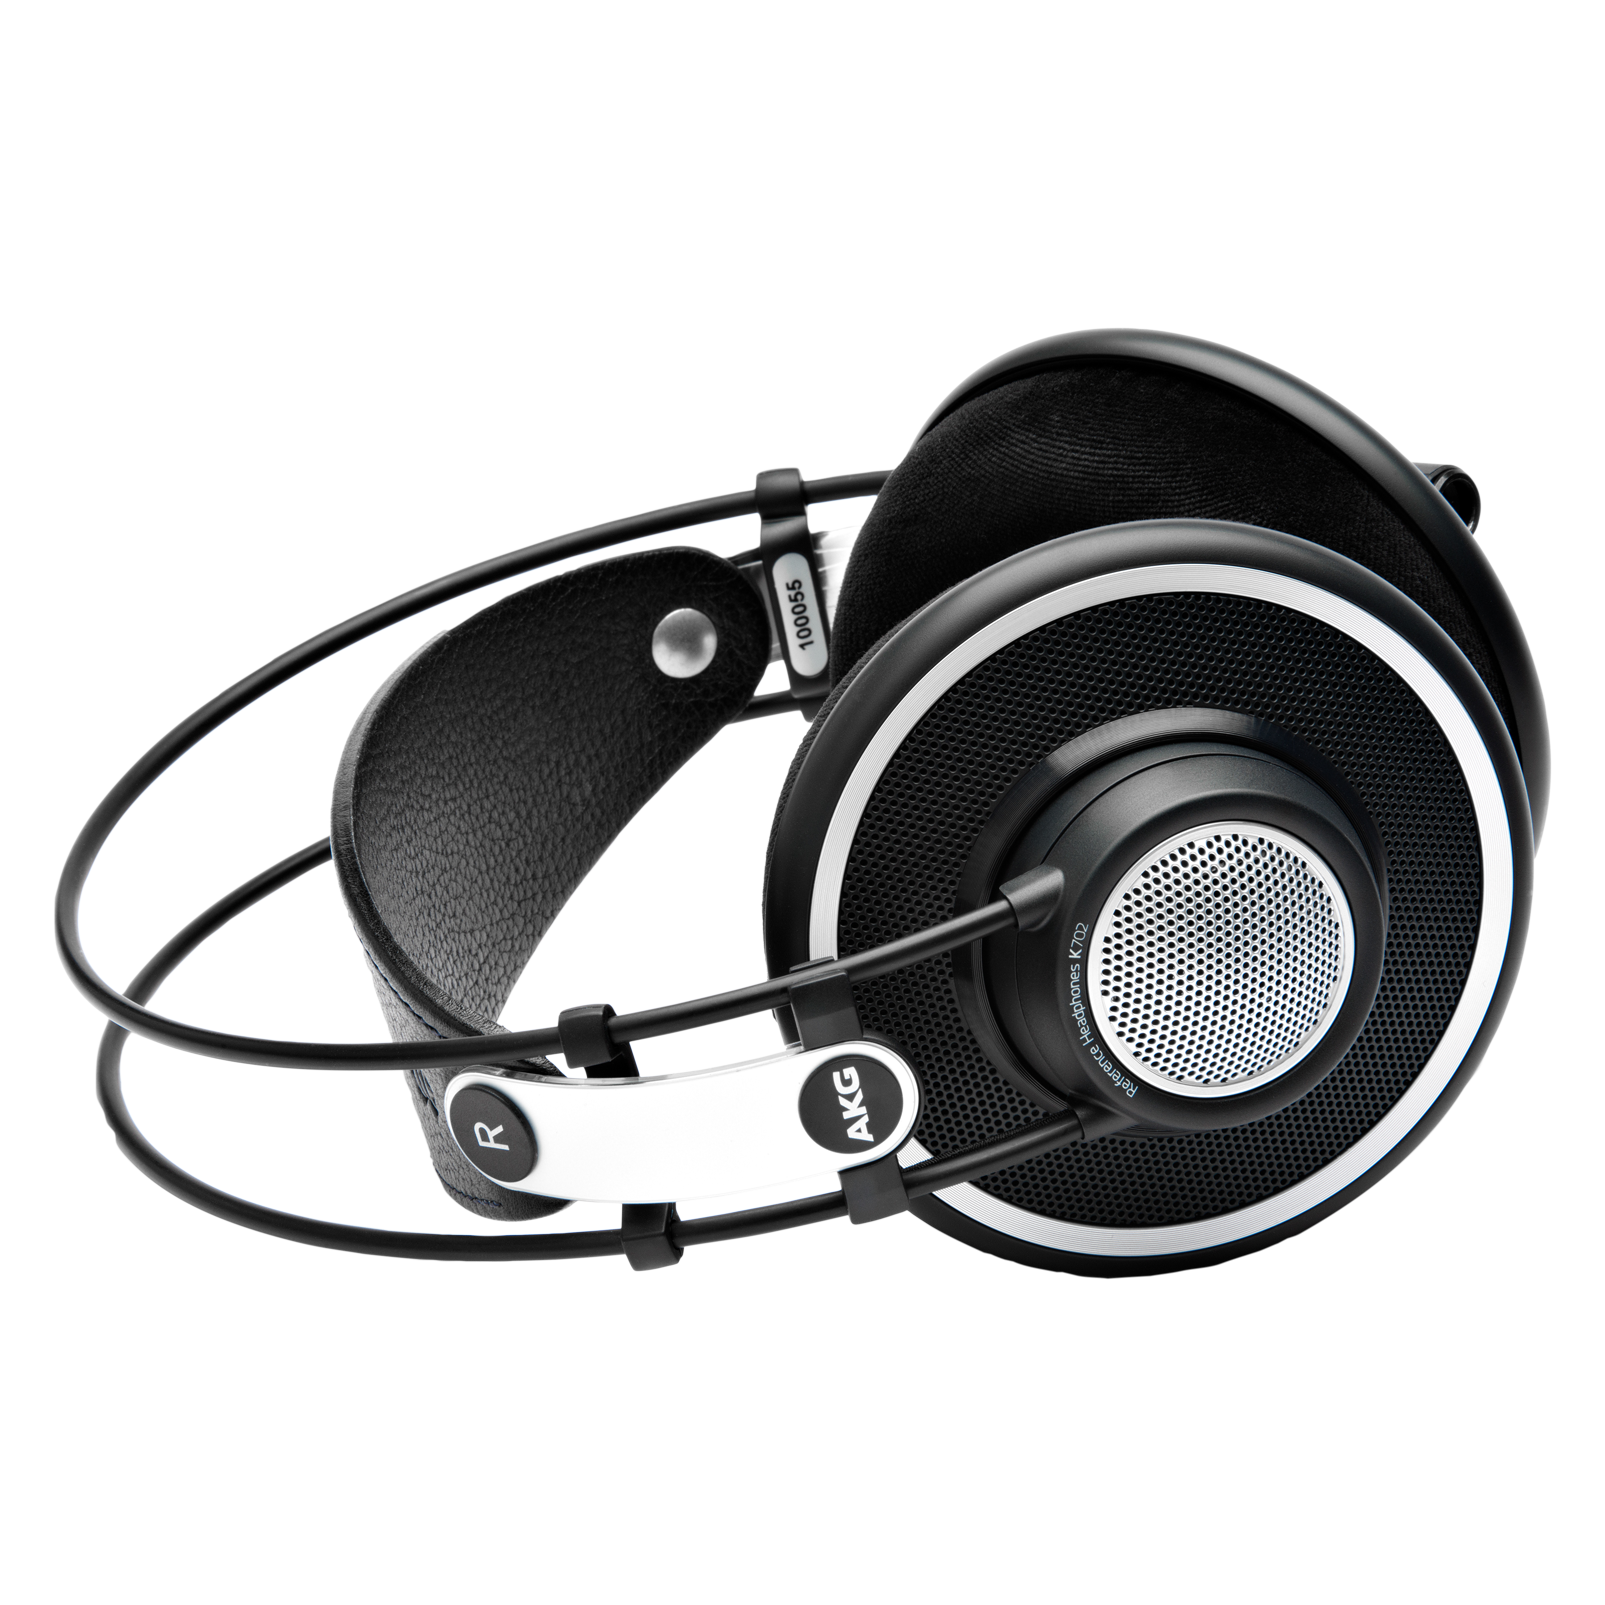 K702 - Black - Reference studio headphones - Detailshot 3